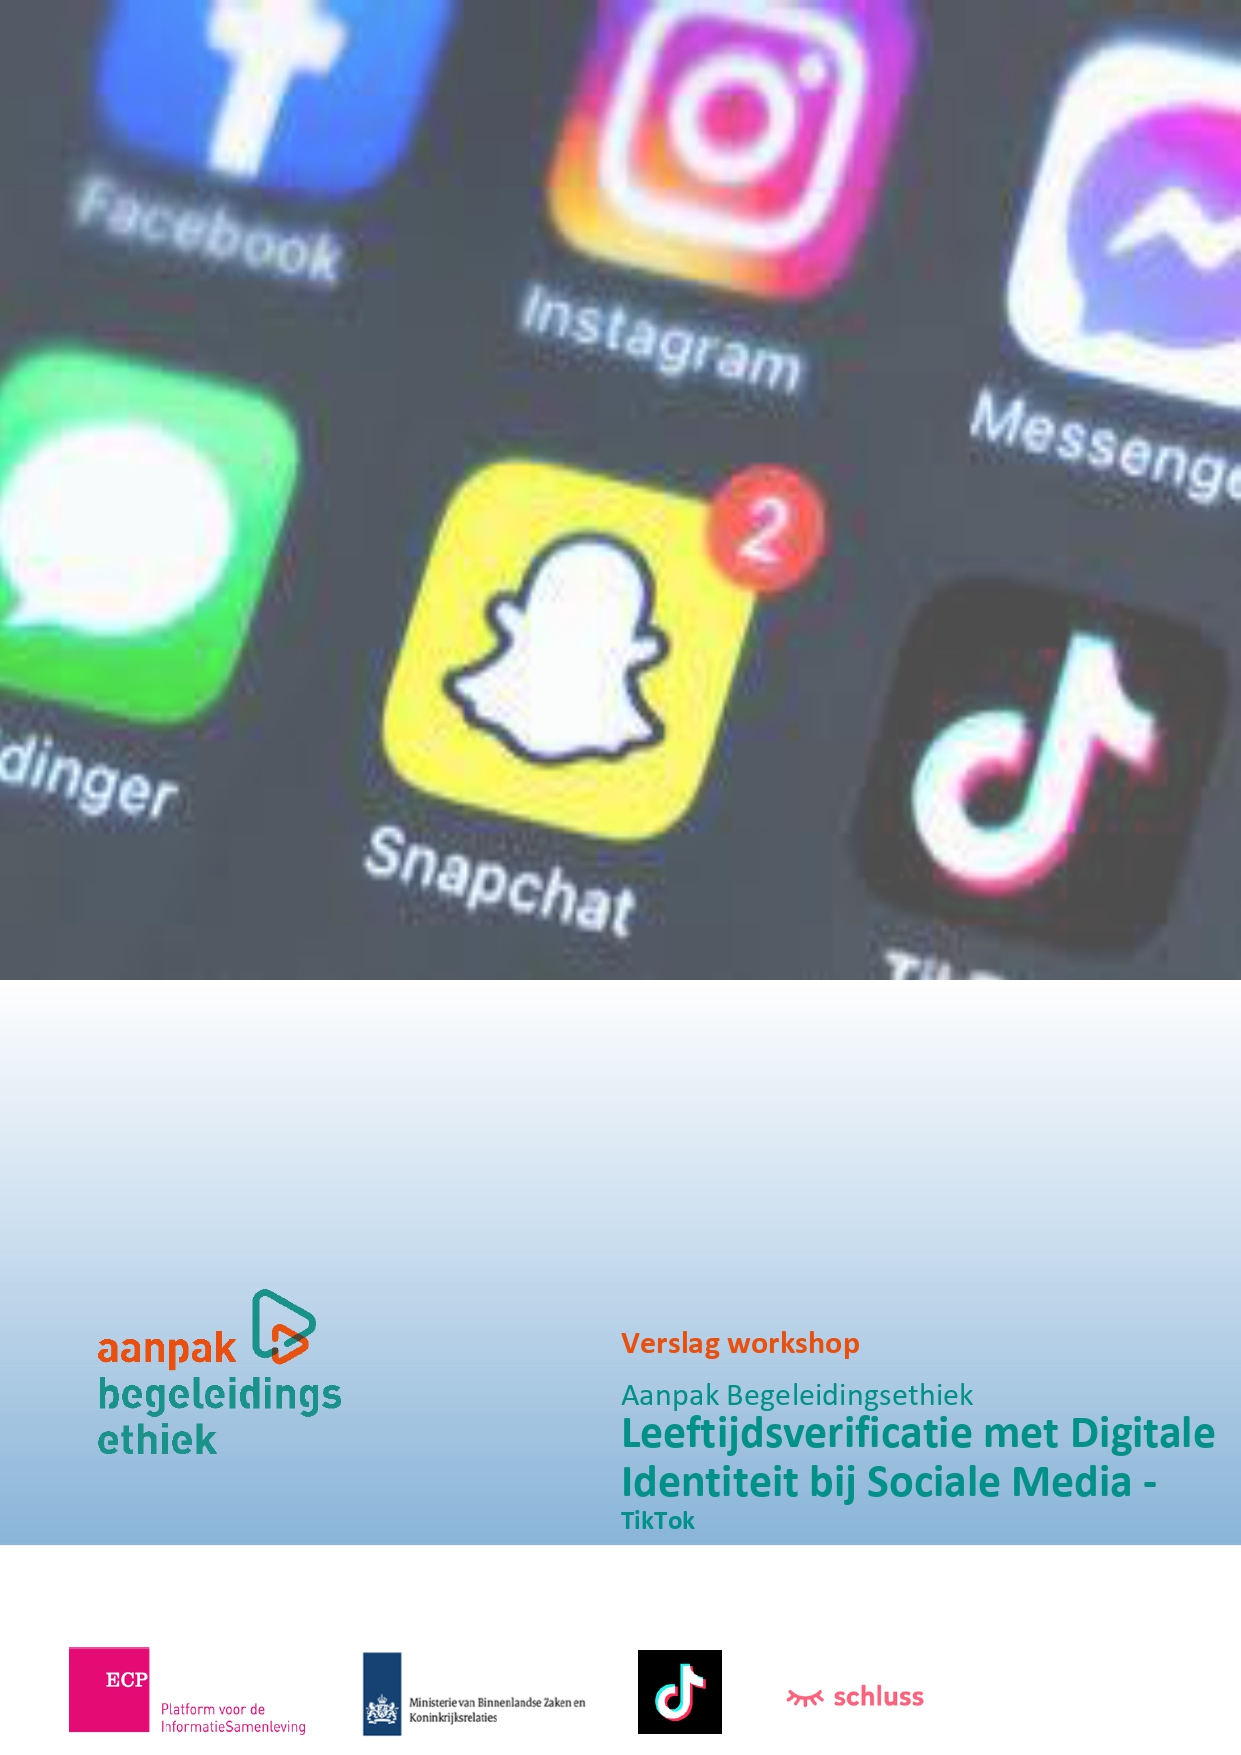 TikTok – Leeftijdsverificatie met Digitale Identiteit bij Sociale Media